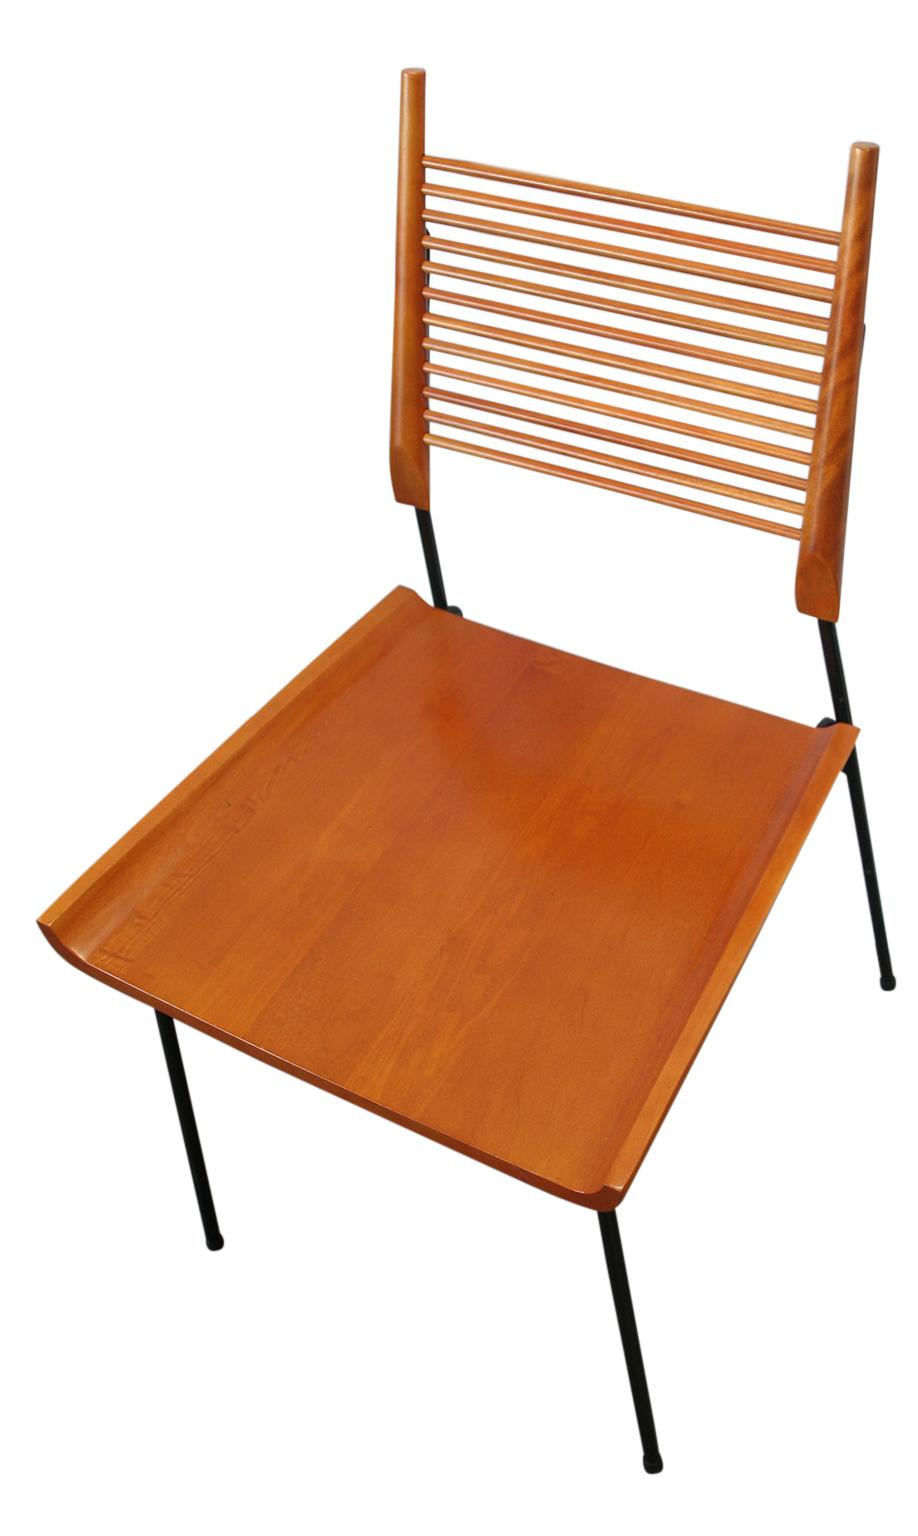 20th Century Paul McCobb Planner Group Shovel Chairs #1533 Maple Iron